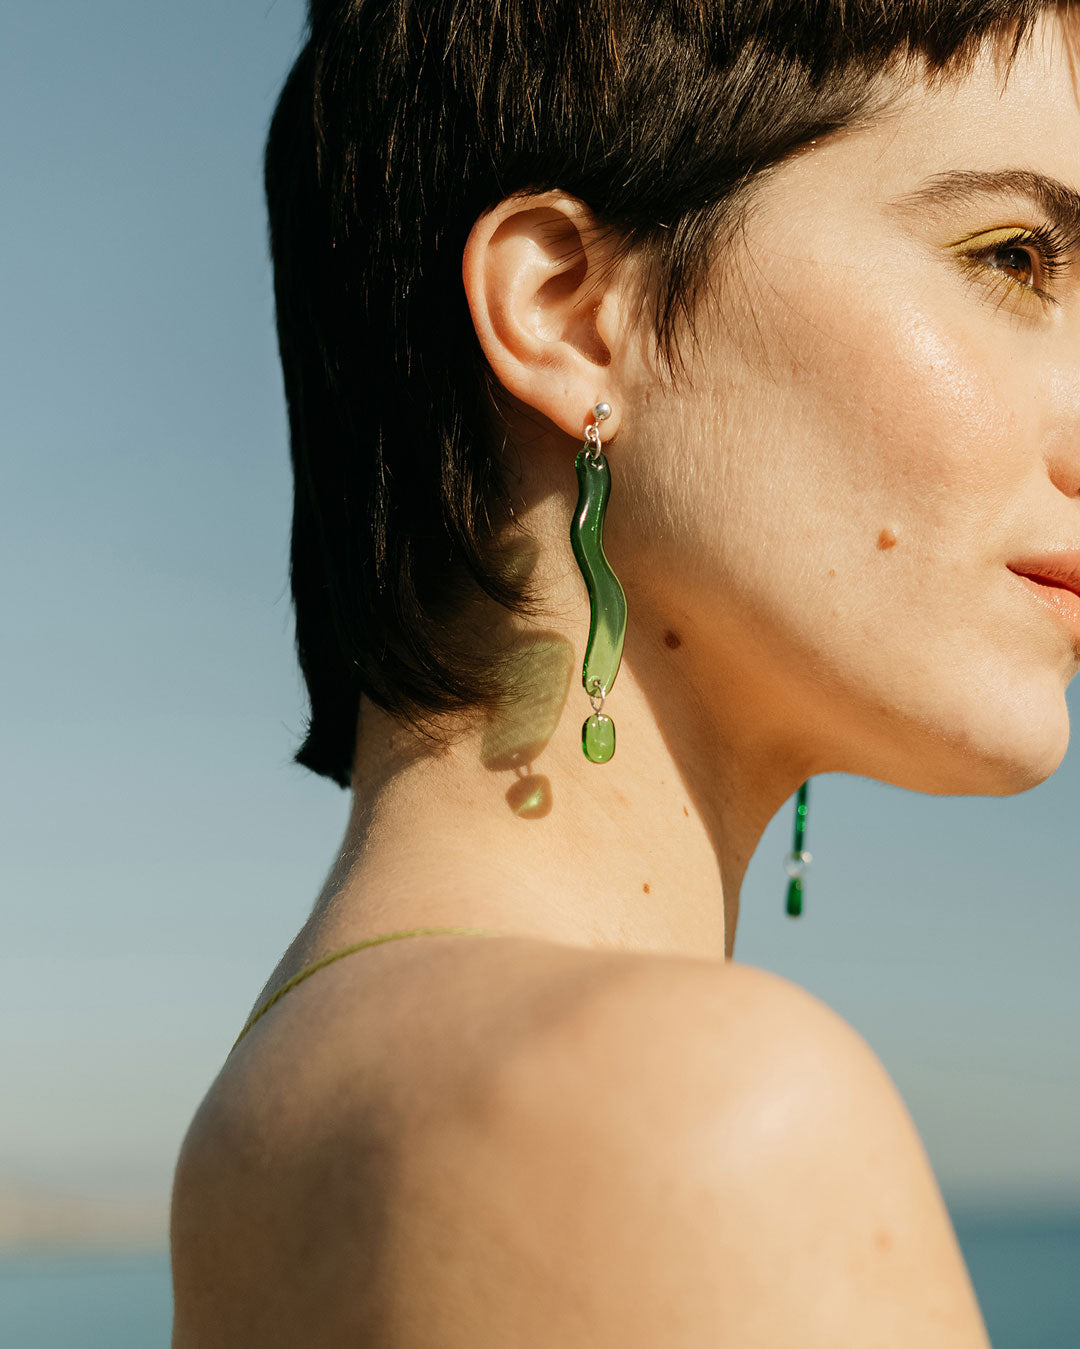 Cactus earring